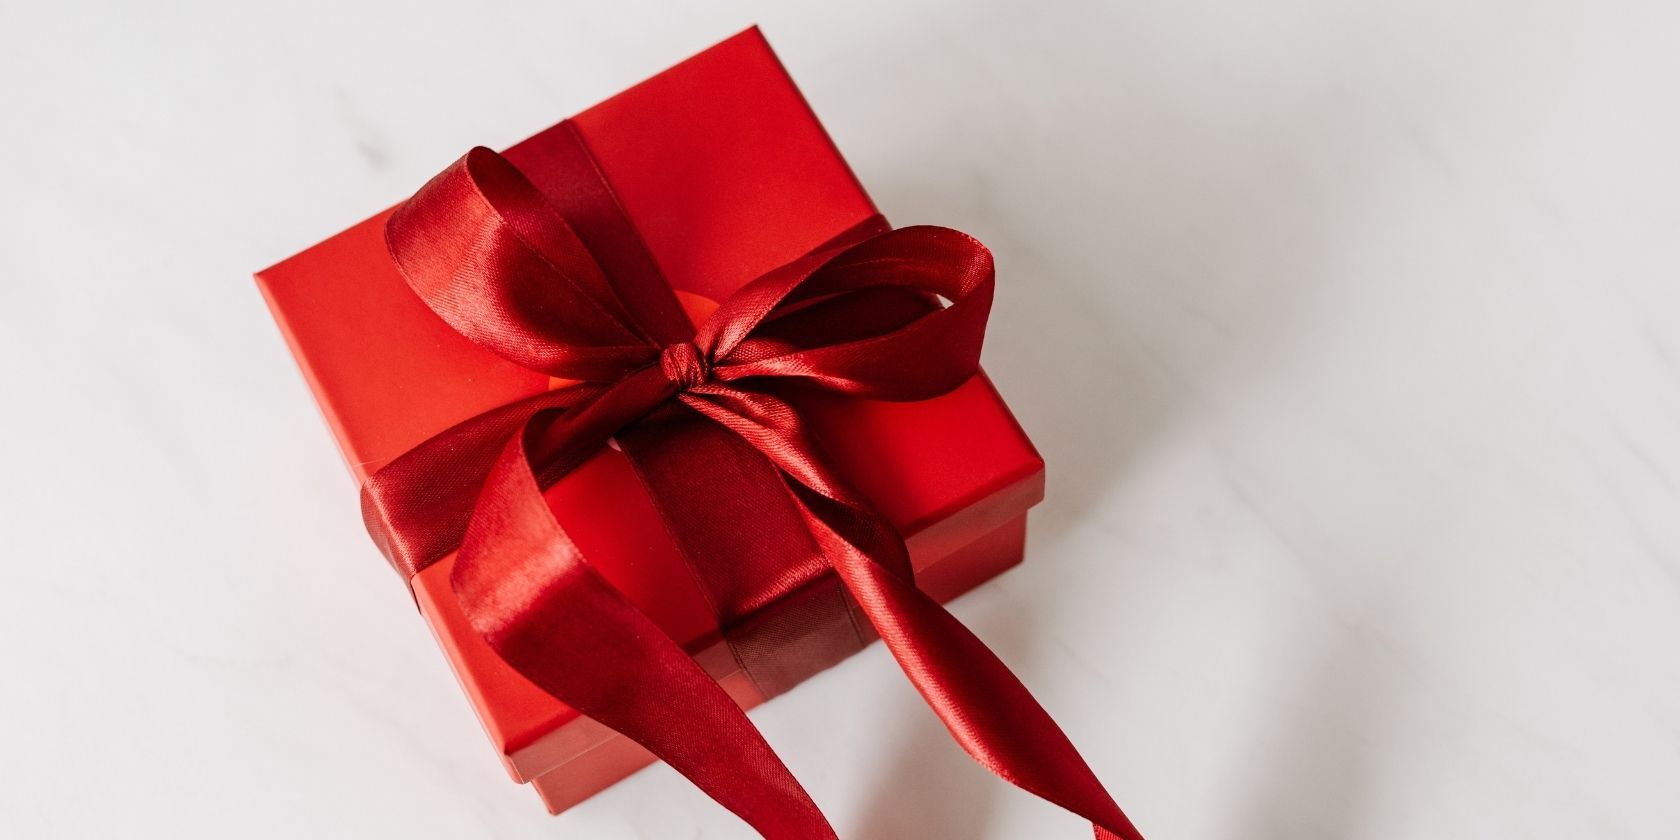 red gift box and ribbon